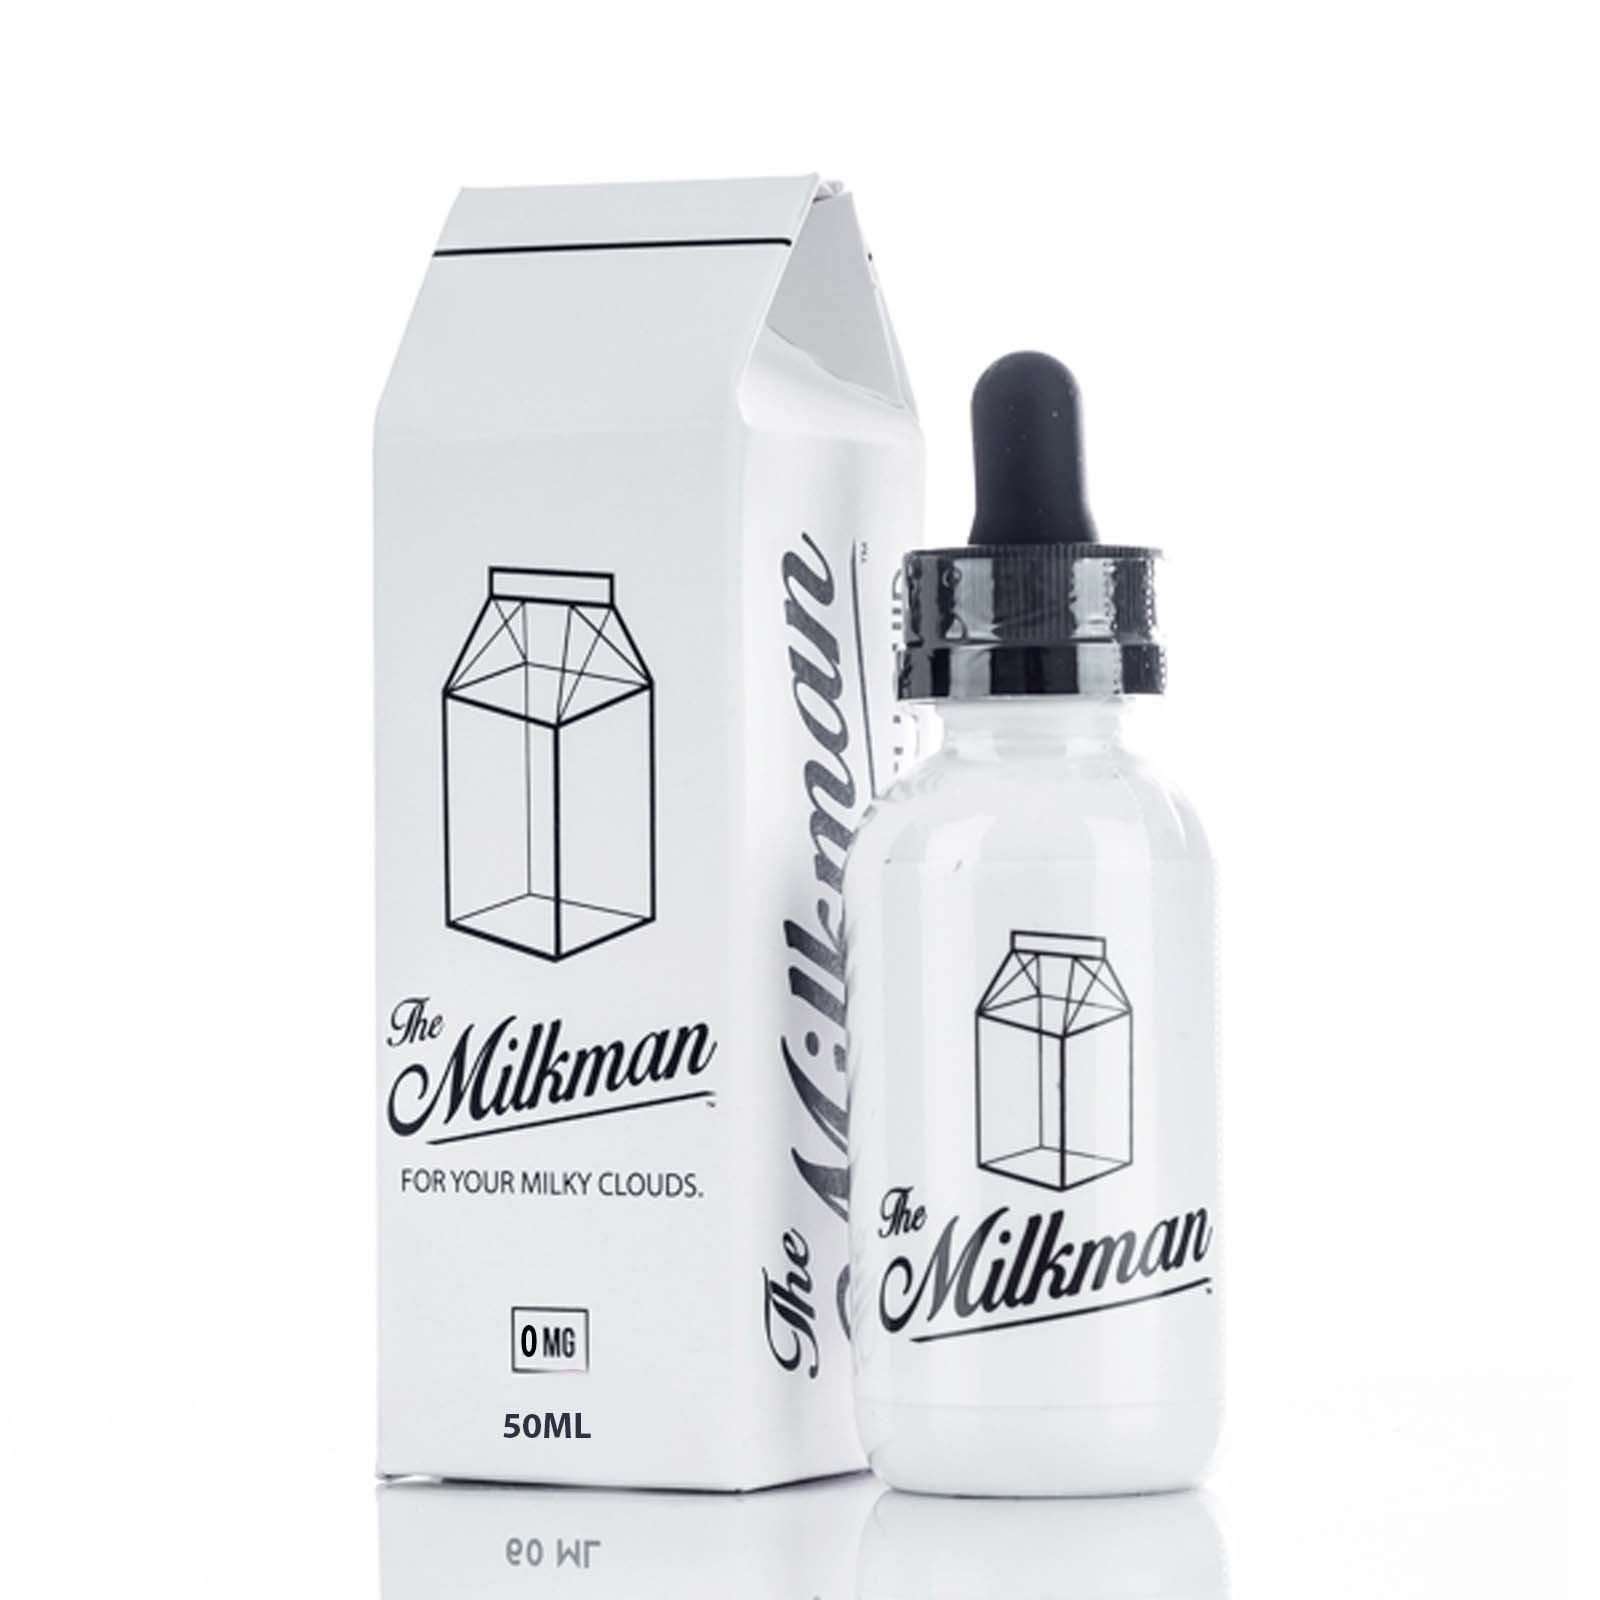  The Milkman E Liquid - The Milkman - 50ml 